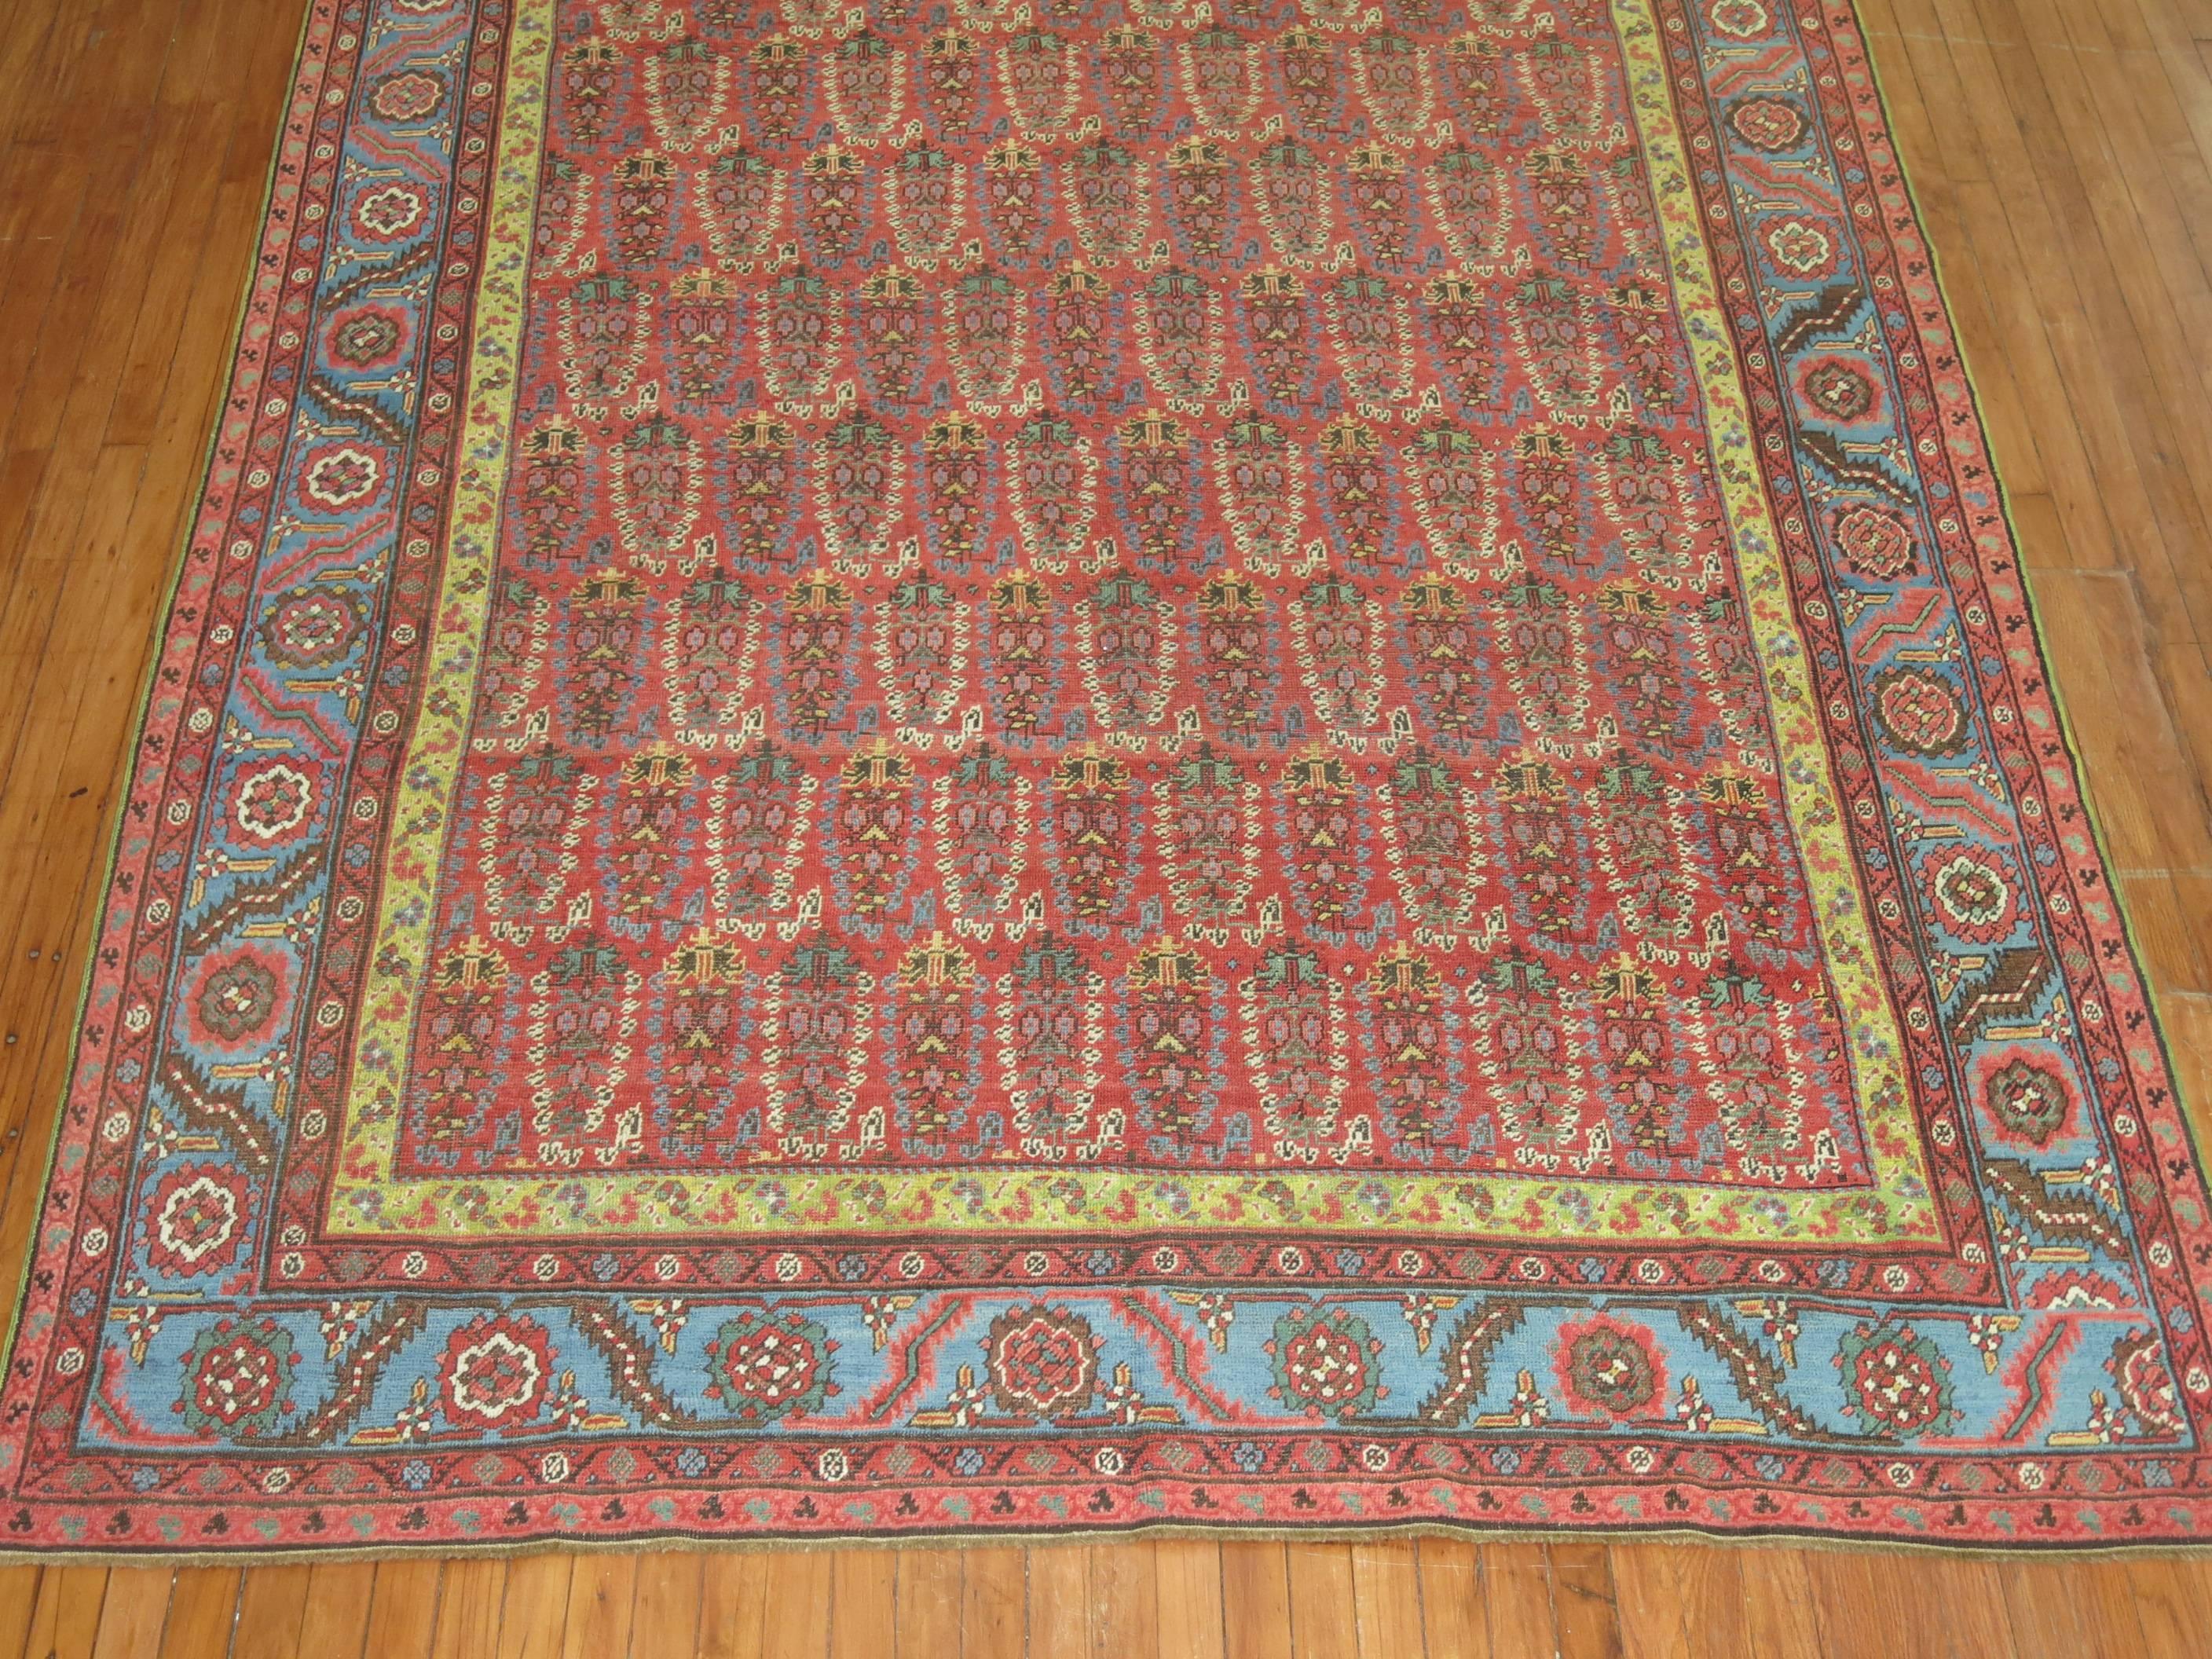 20th Century Antique Bakshaish Gallery Carpet For Sale